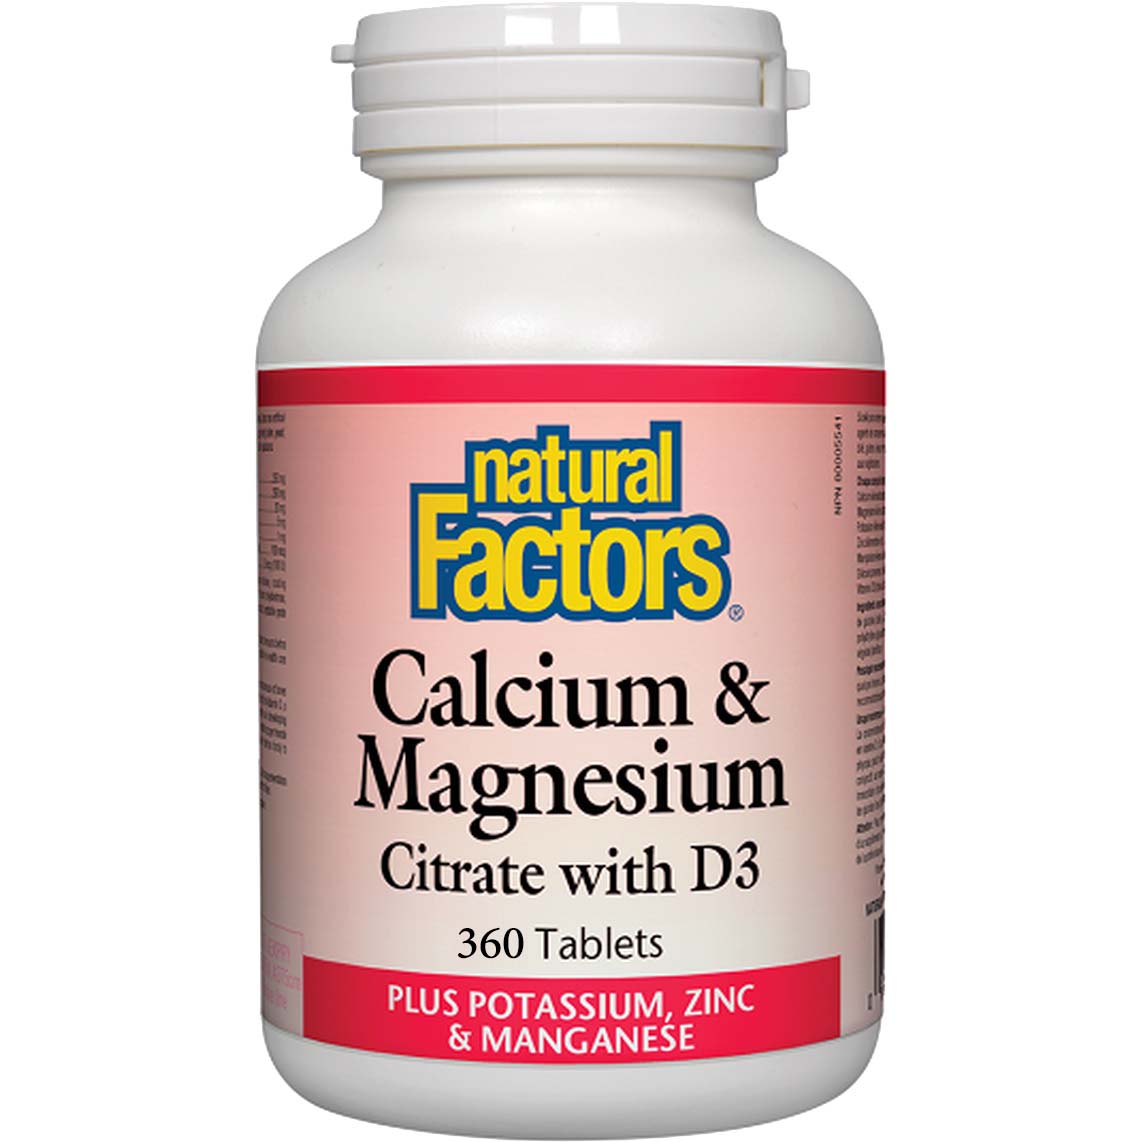 Natural Factors Calcium & Magnesium Citrate with D3 Plus Potassium, Zinc & Manganese, 360 Tablets